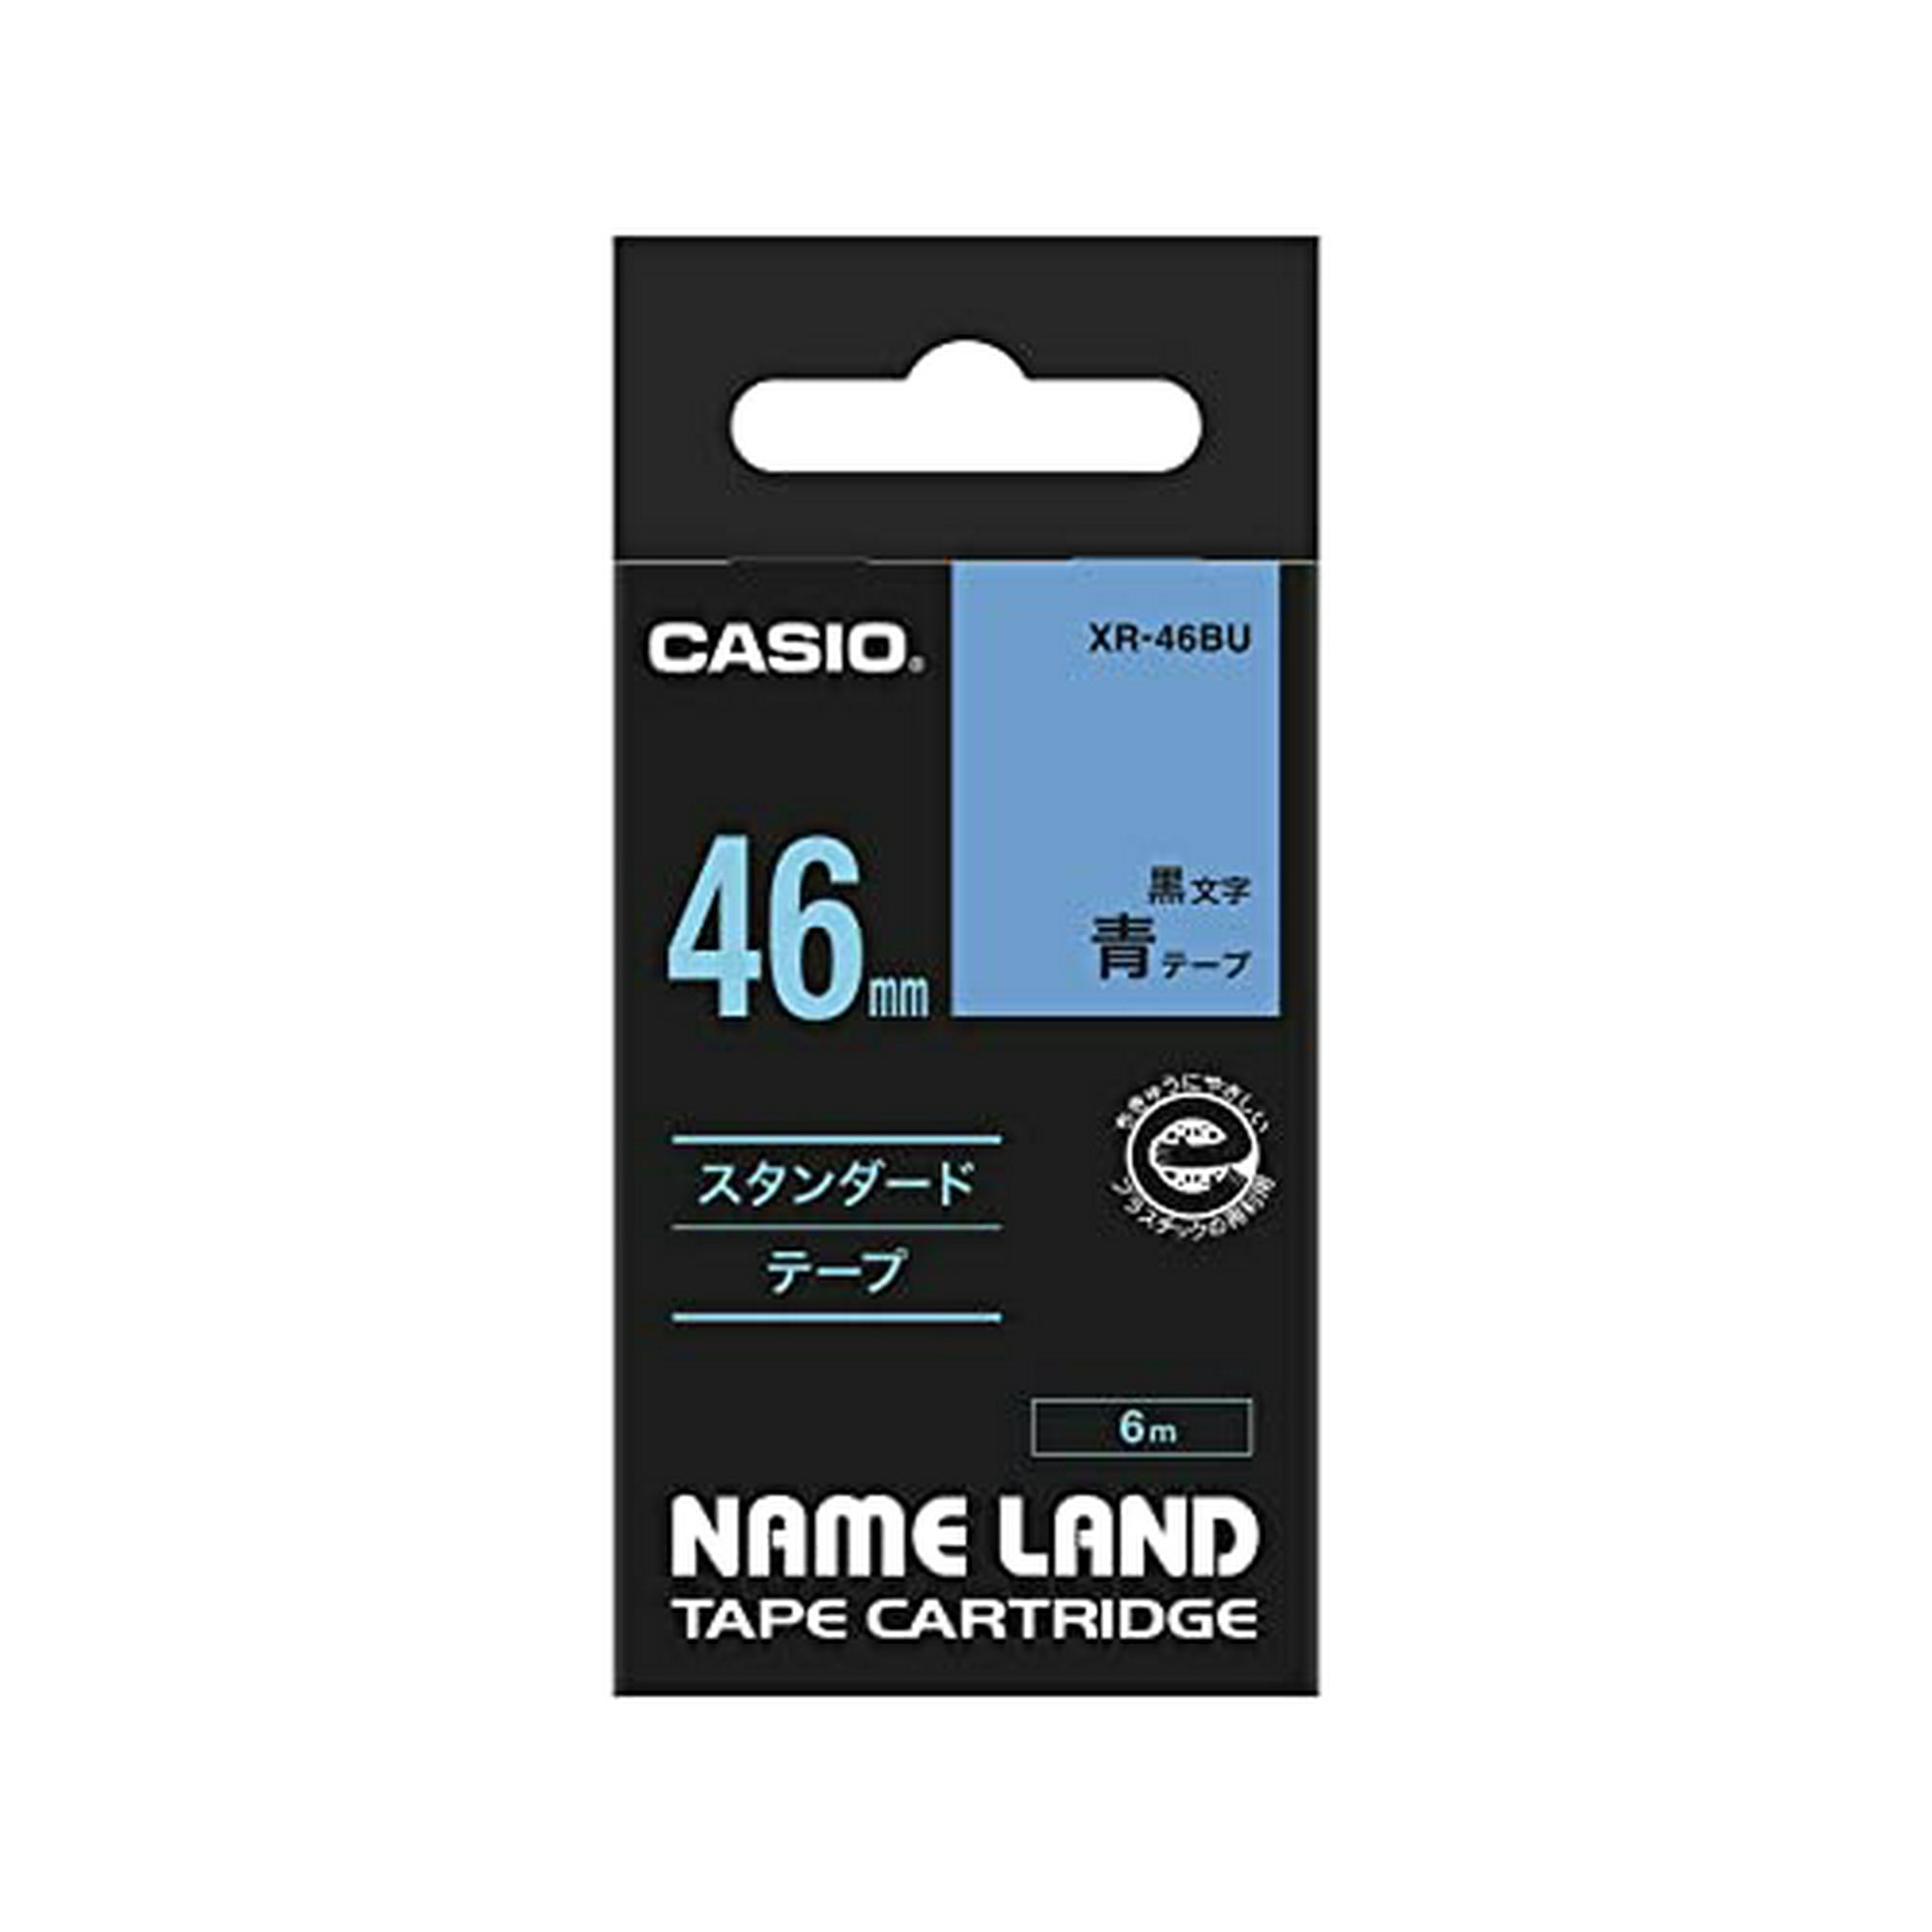 Casio Label Writer Nameland Genuine Tape 46mm XR-46BU Black